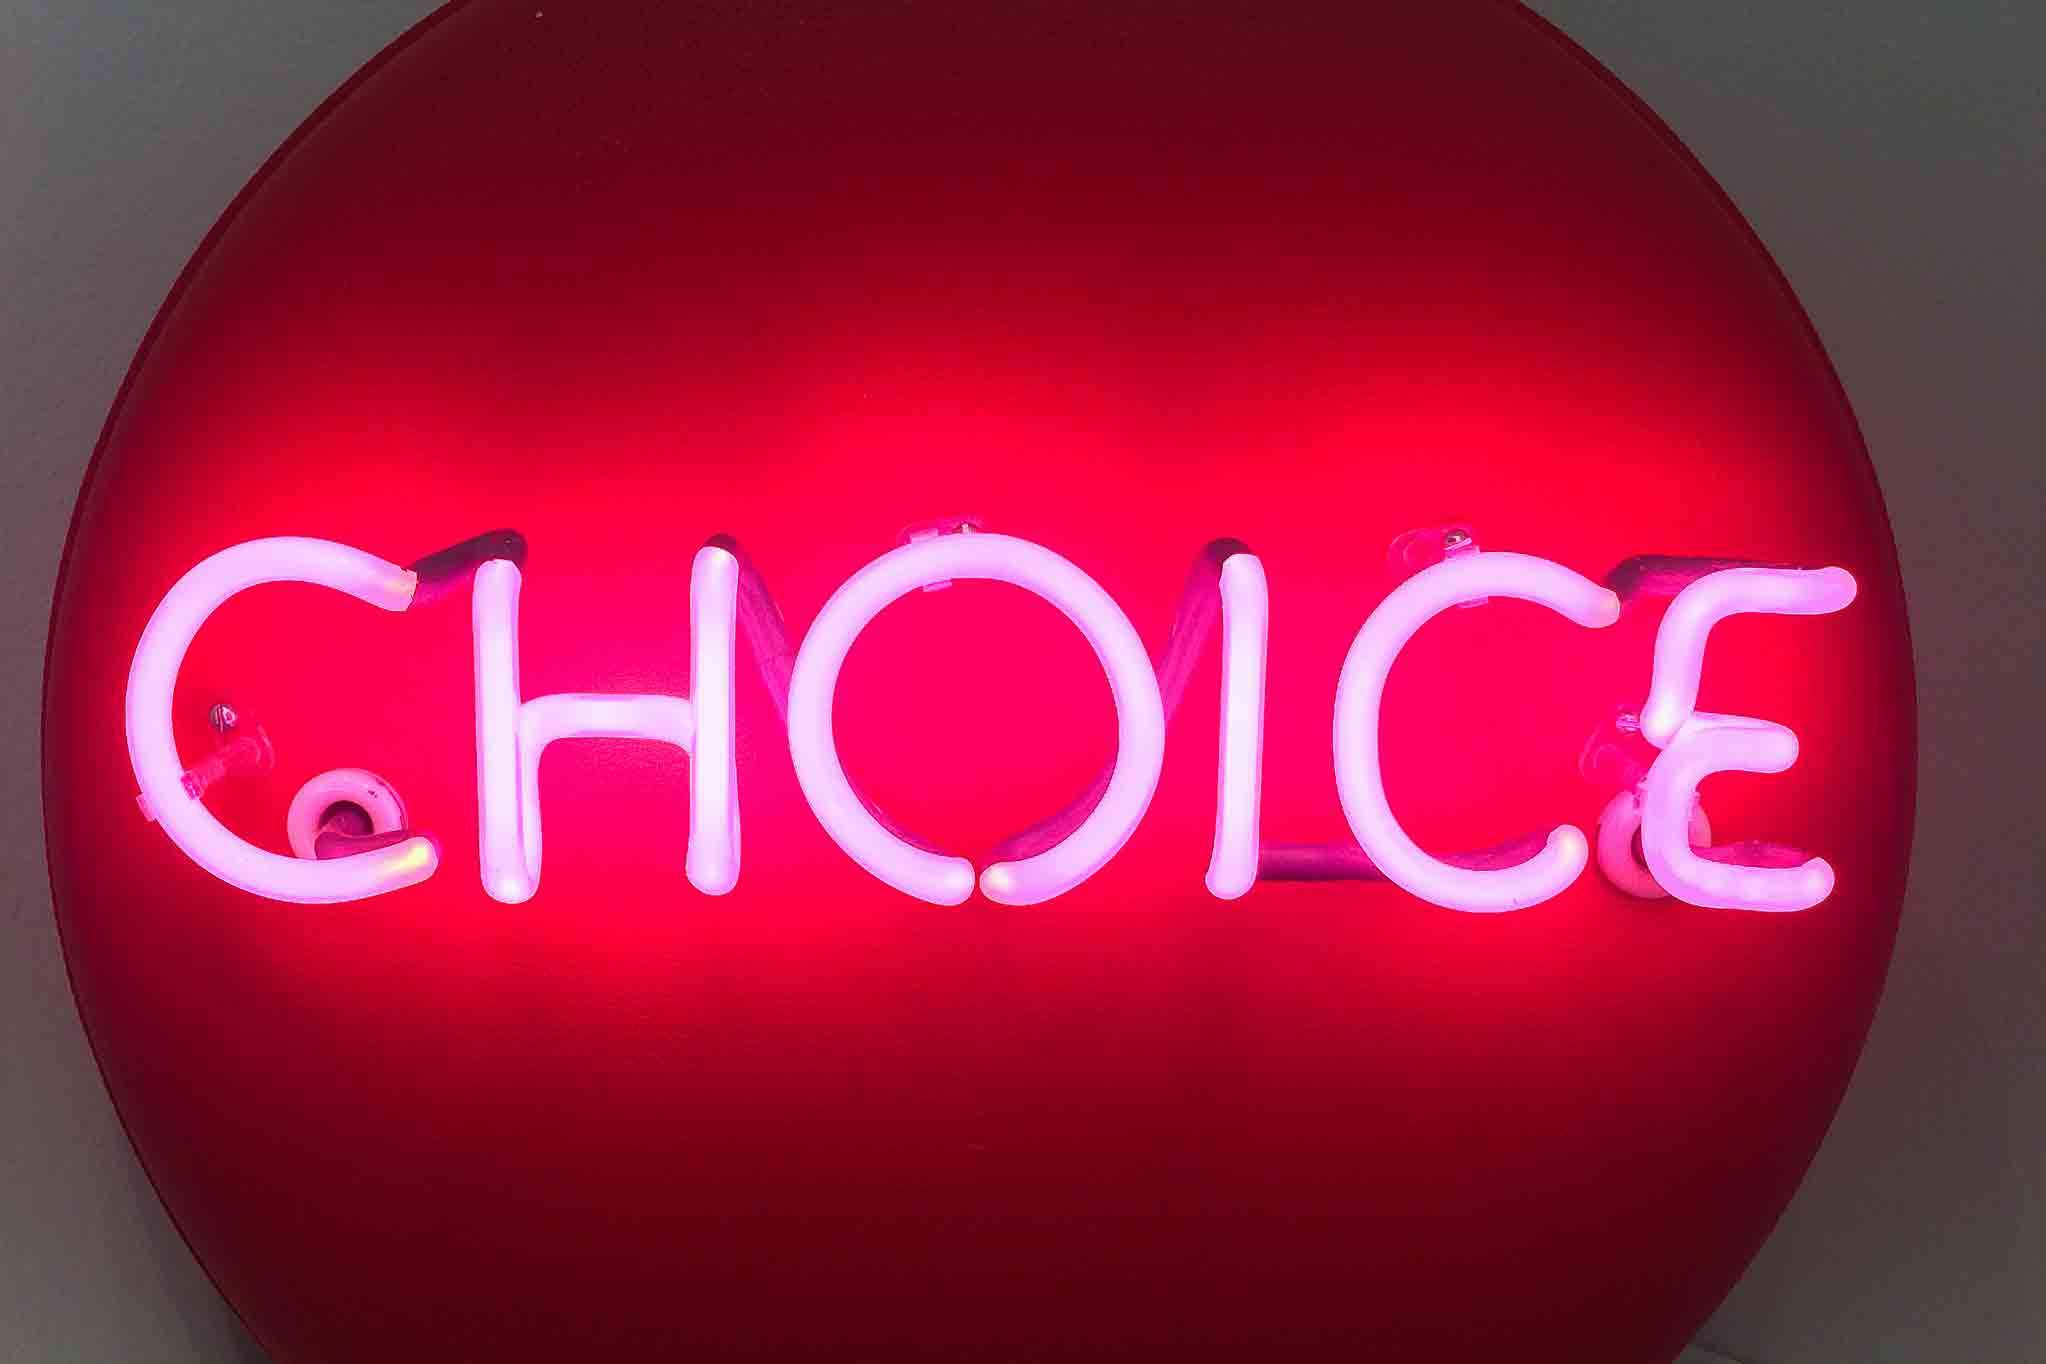 "CHOICE" fluorescent sign